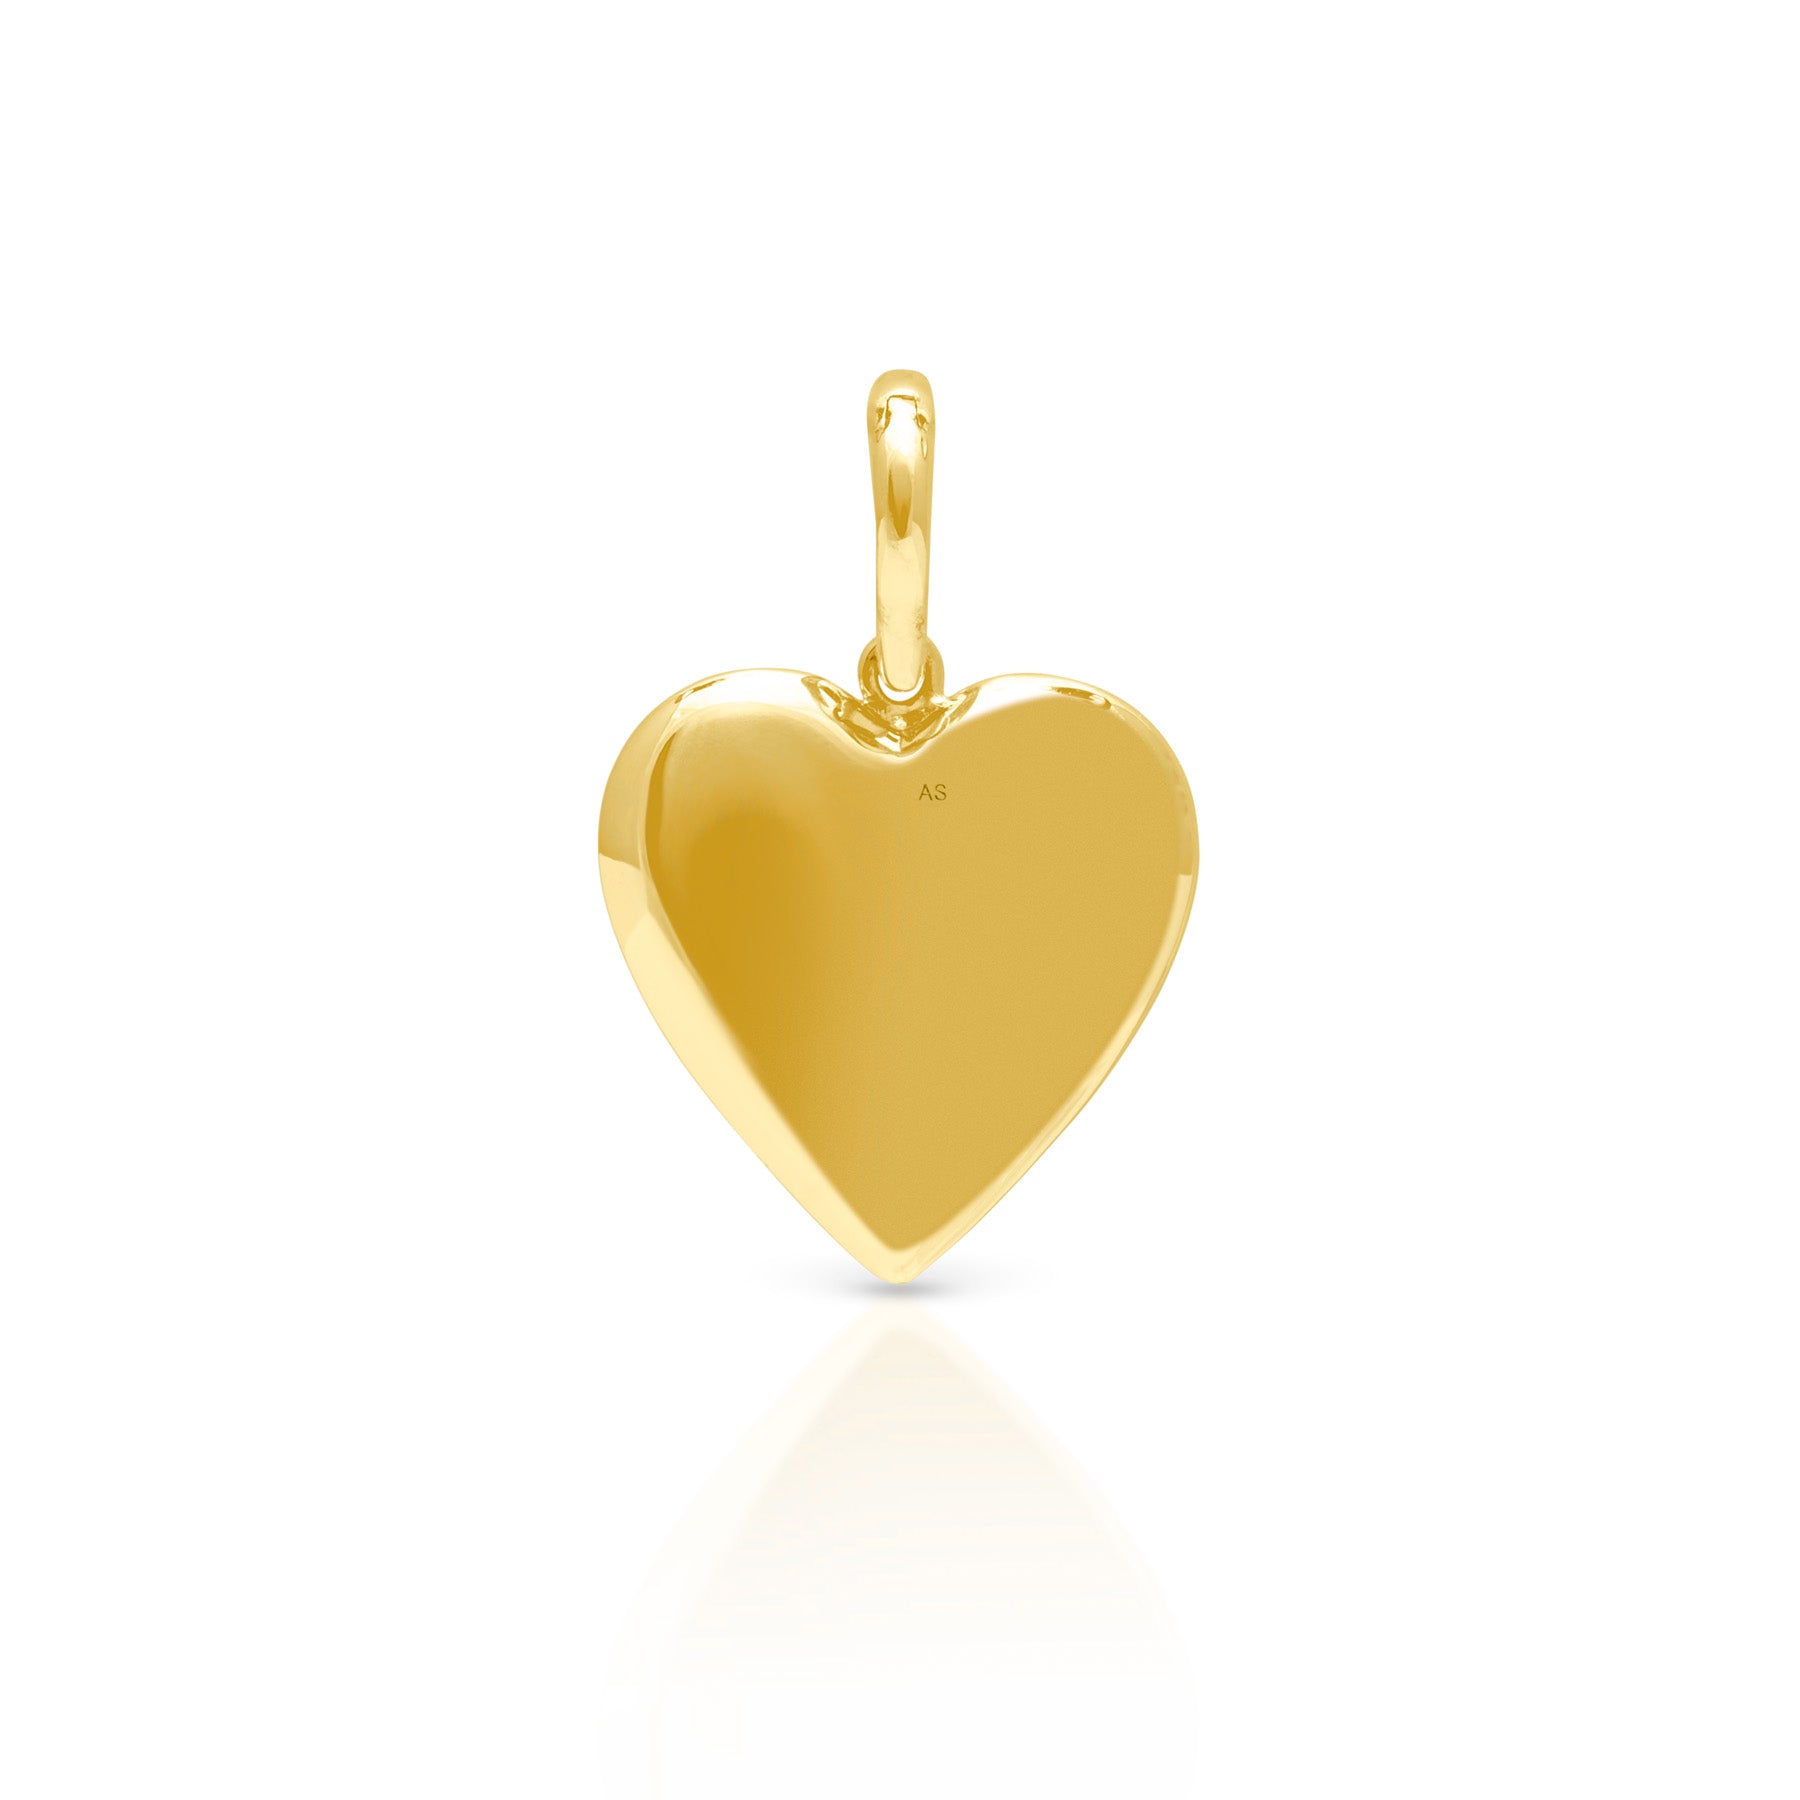 14KT Yellow Gold Pink Tourmaline Diamond Valentina Heart Charm Pendant with Diamond Clip on Bail